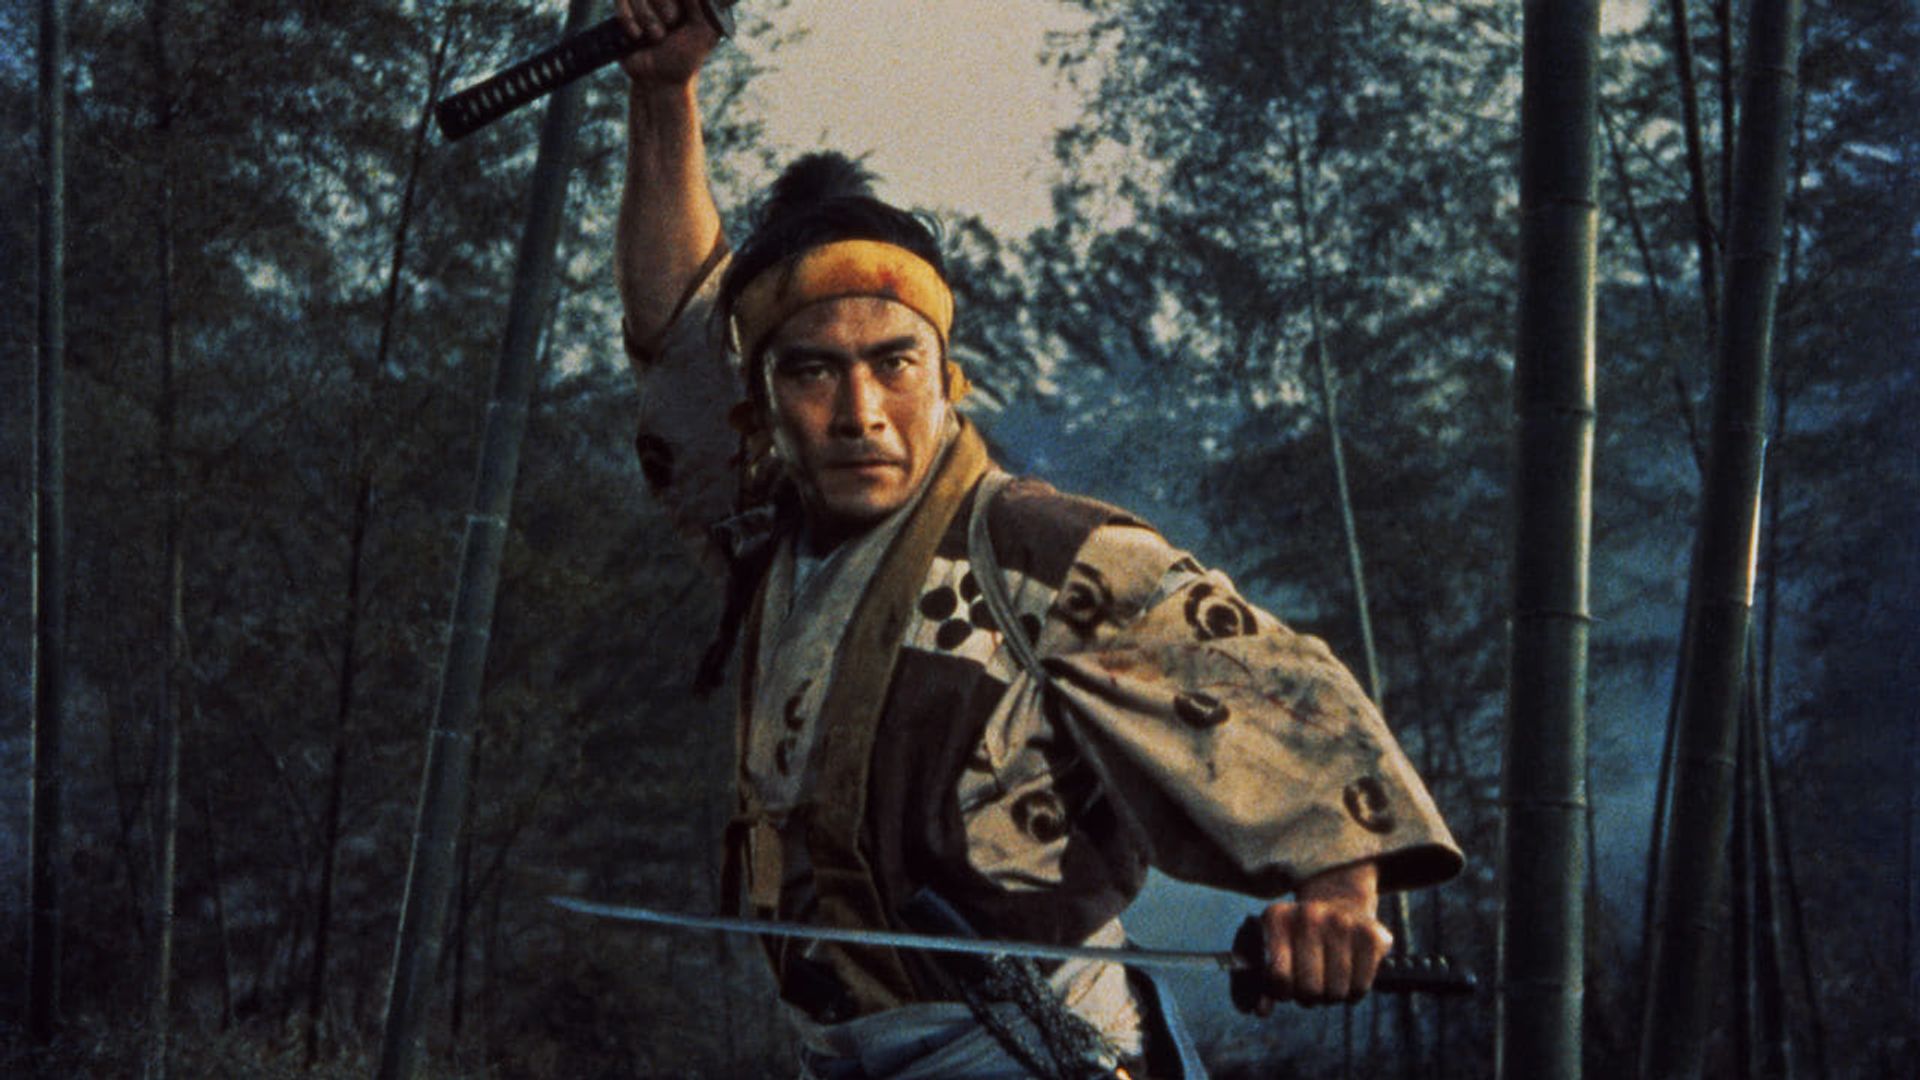 Samurai (Part II) background